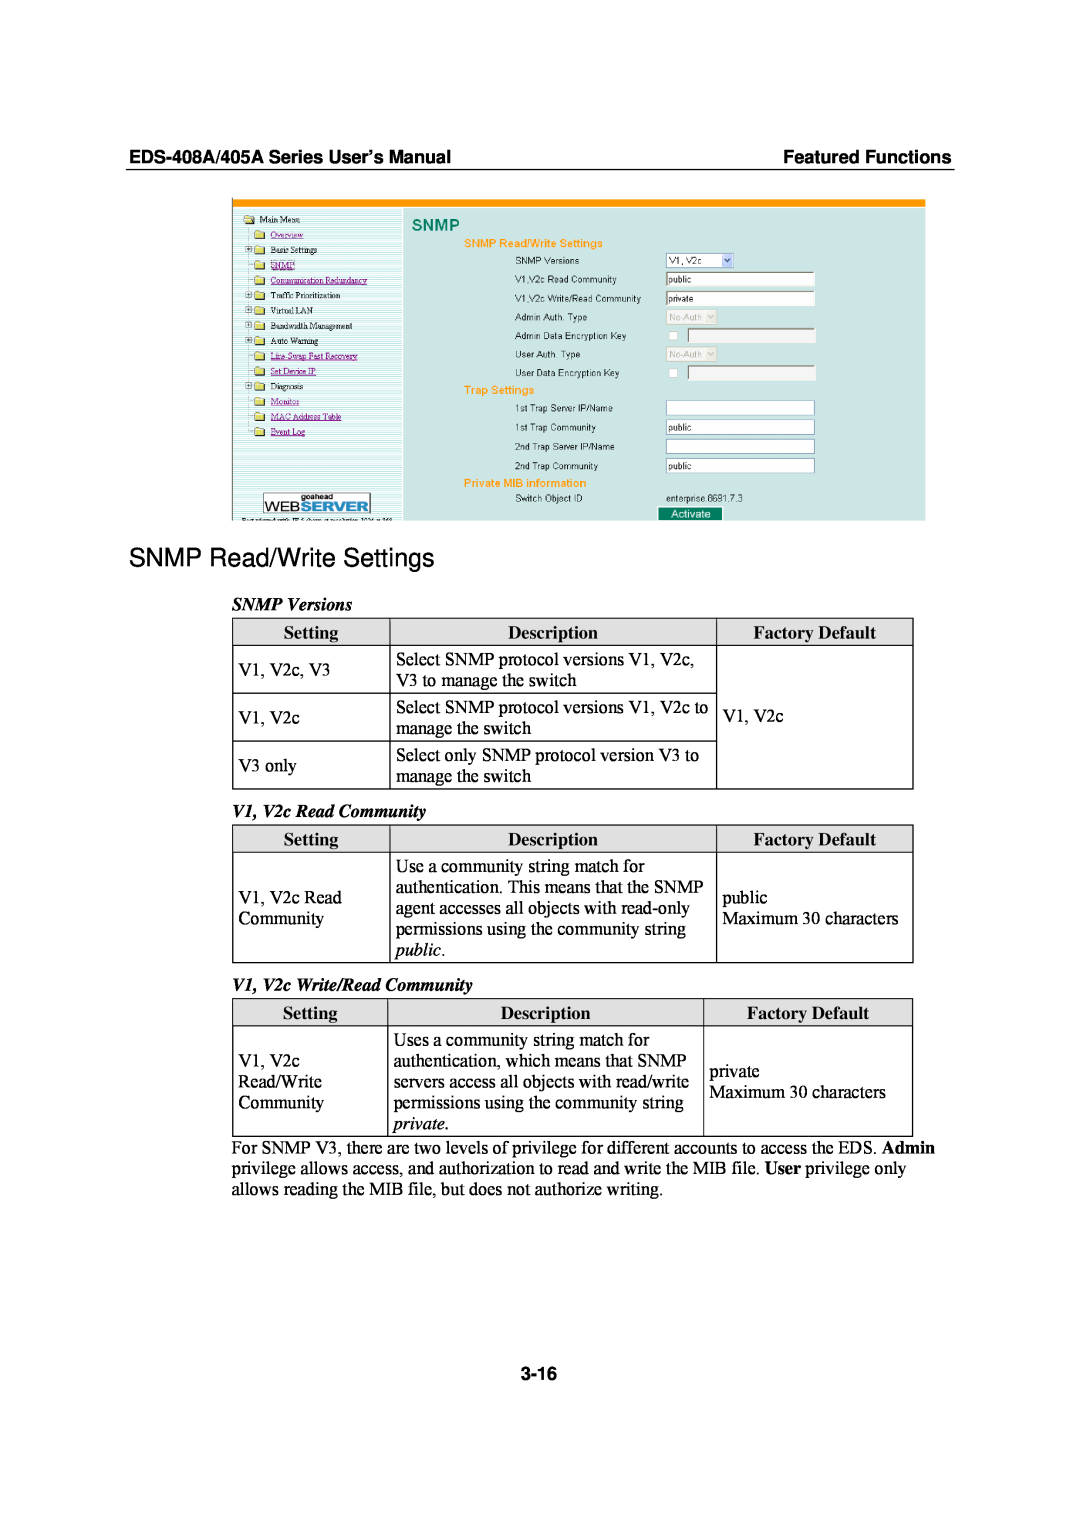 Moxa Technologies EDS-405A SNMP Read/Write Settings, SNMP Versions, V1, V2c Read Community, V1, V2c Write/Read Community 